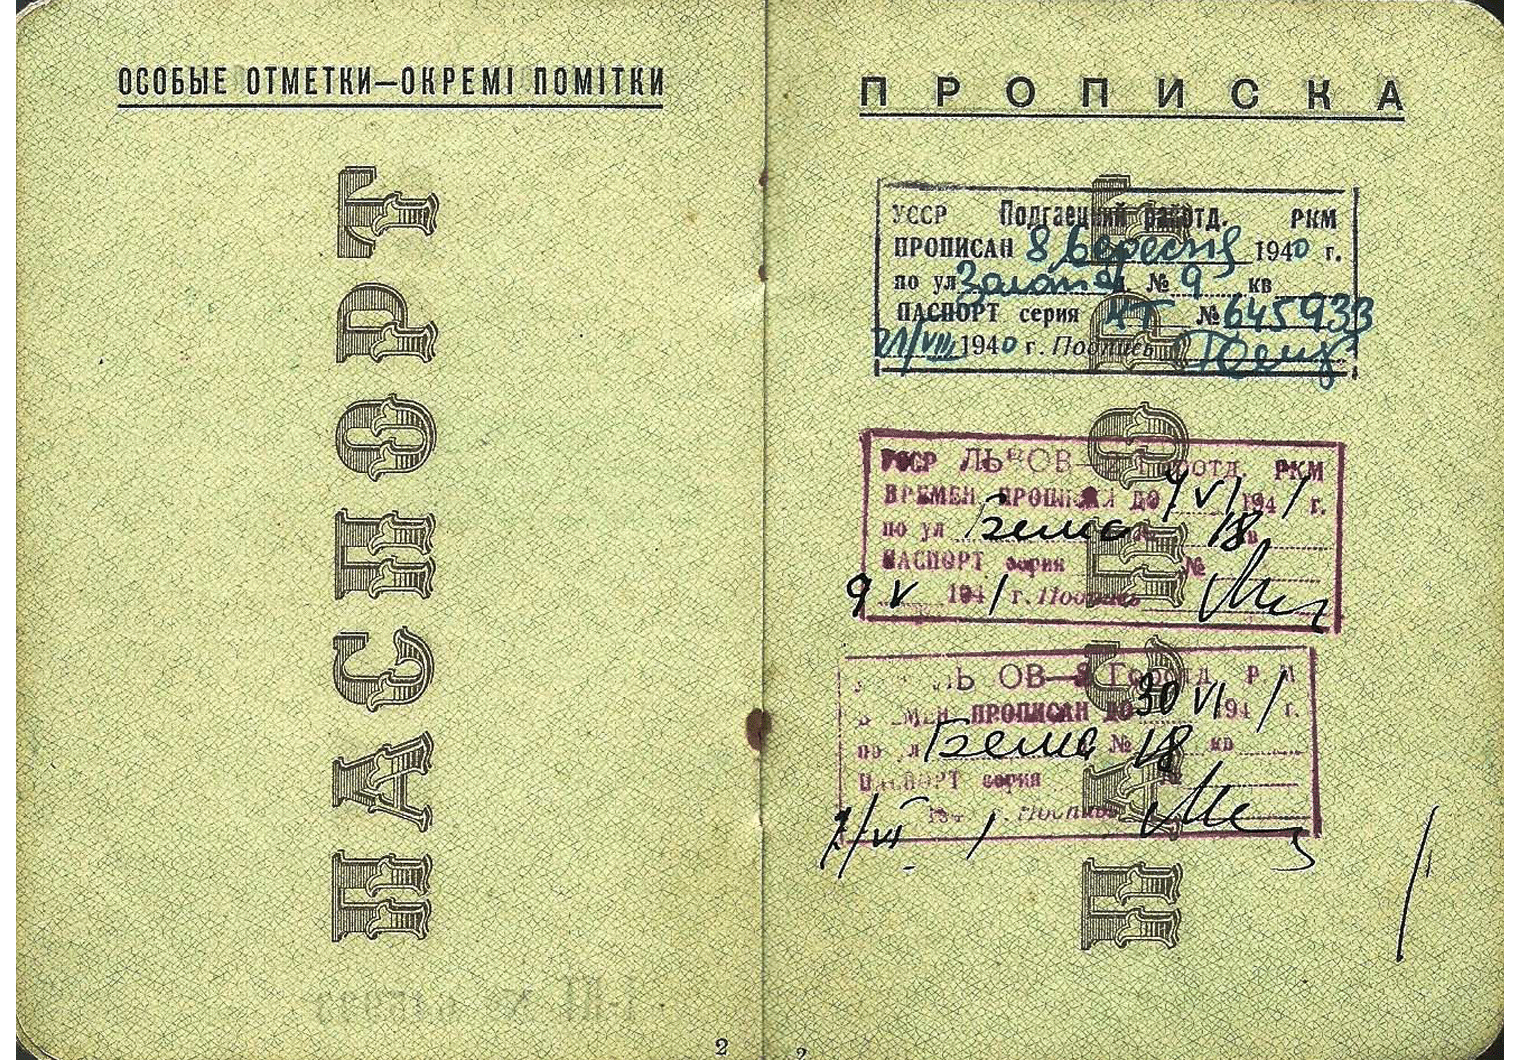 WW2 Soviet occupation passport